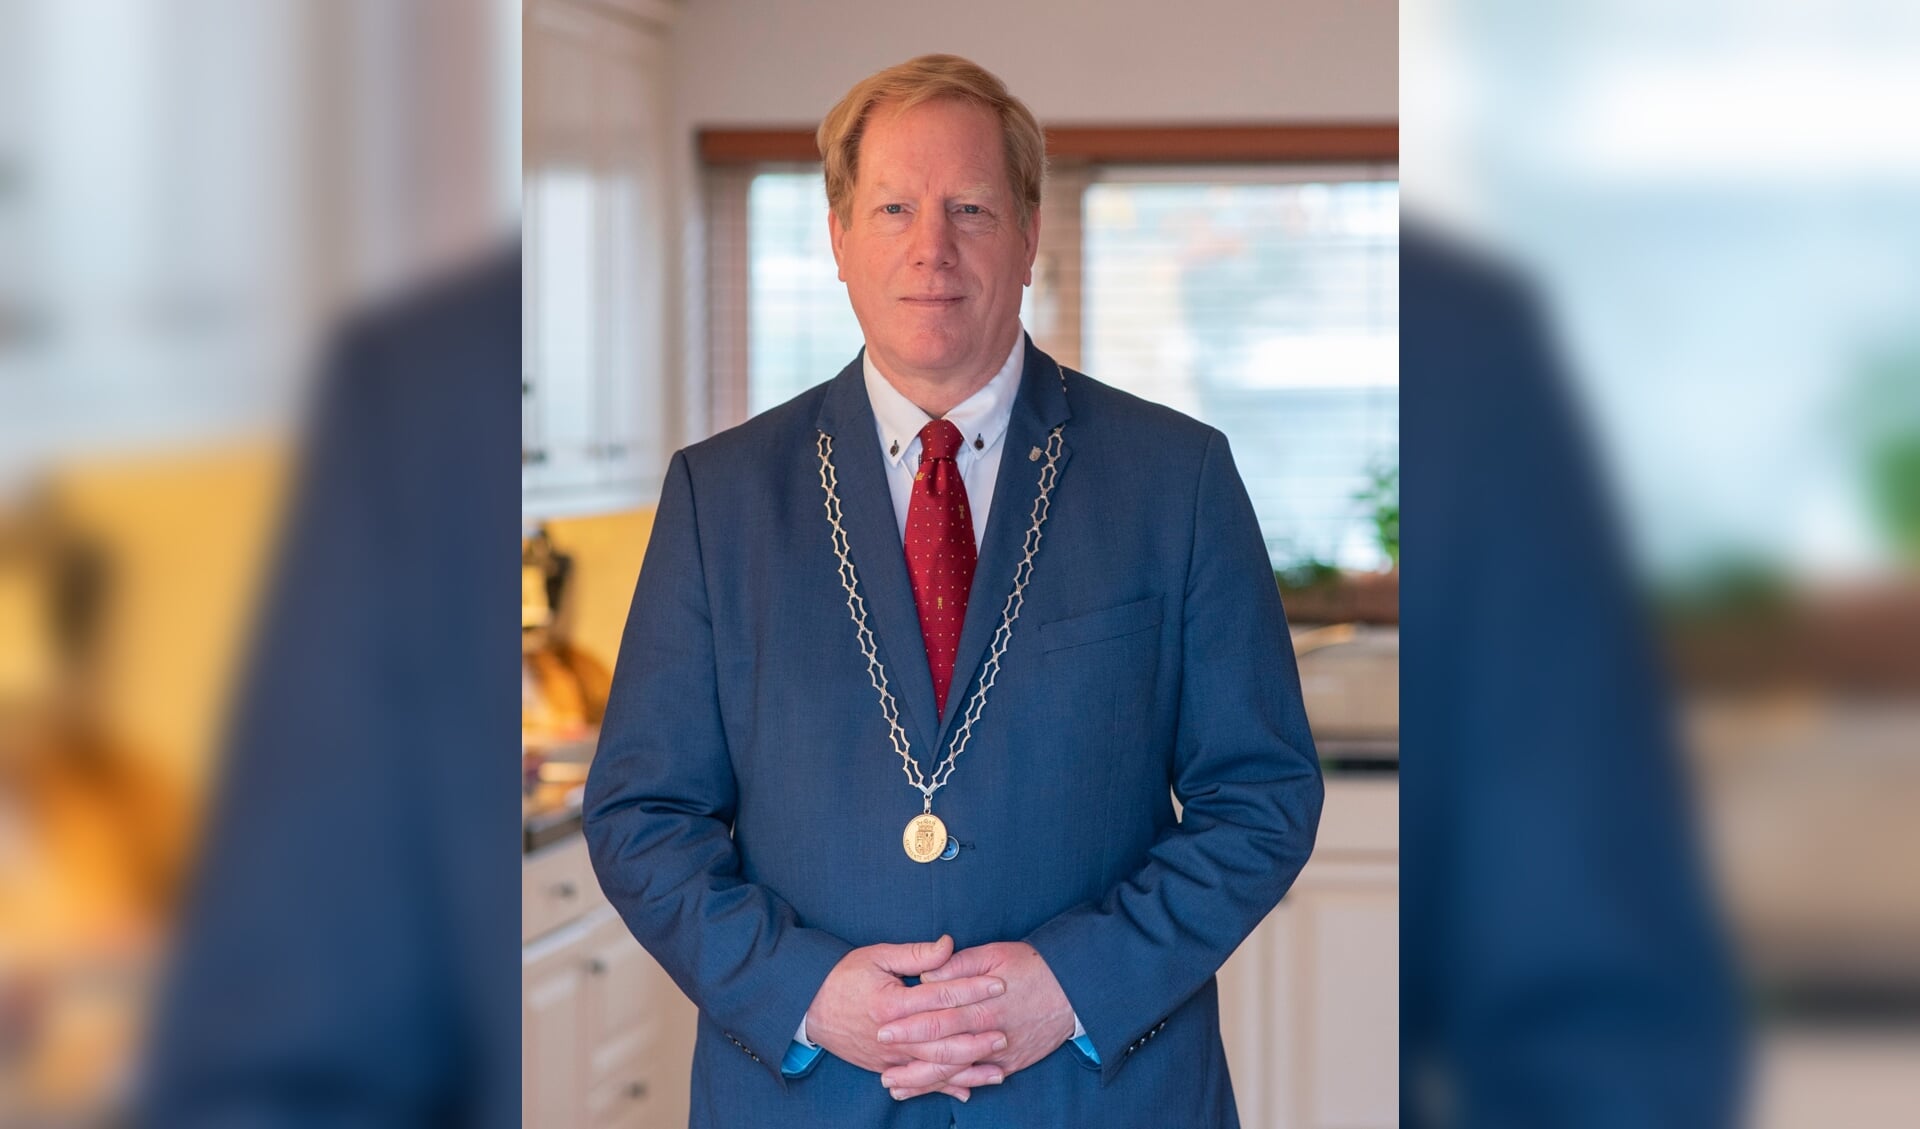 Burgemeester Peter de Jong